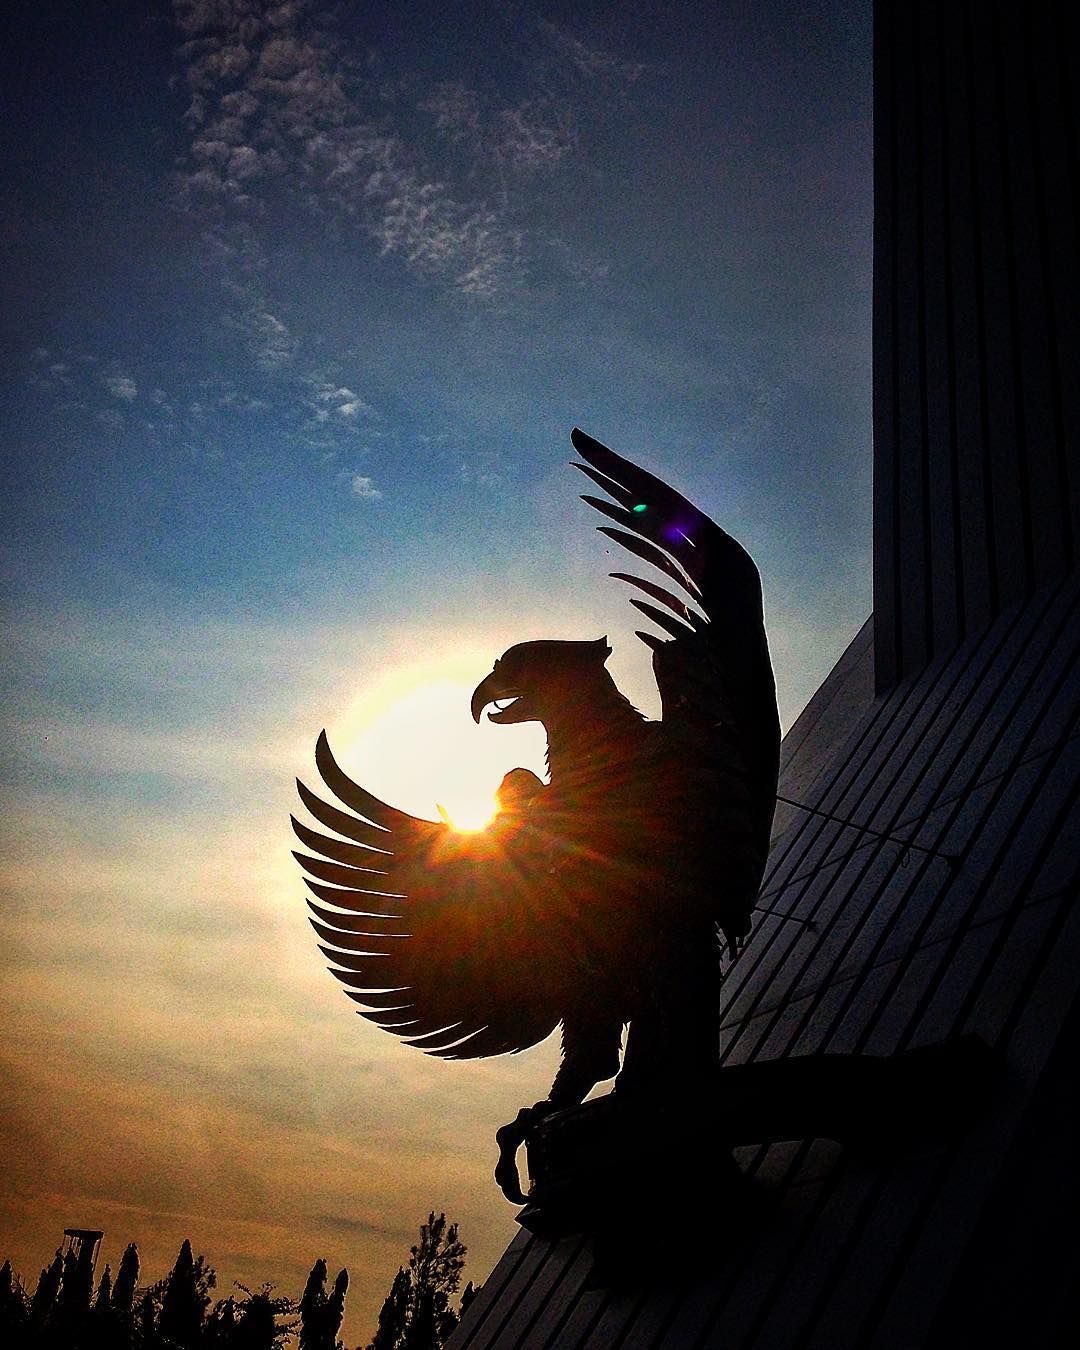 Garuda Pancasila, Indonesia's National Symbol